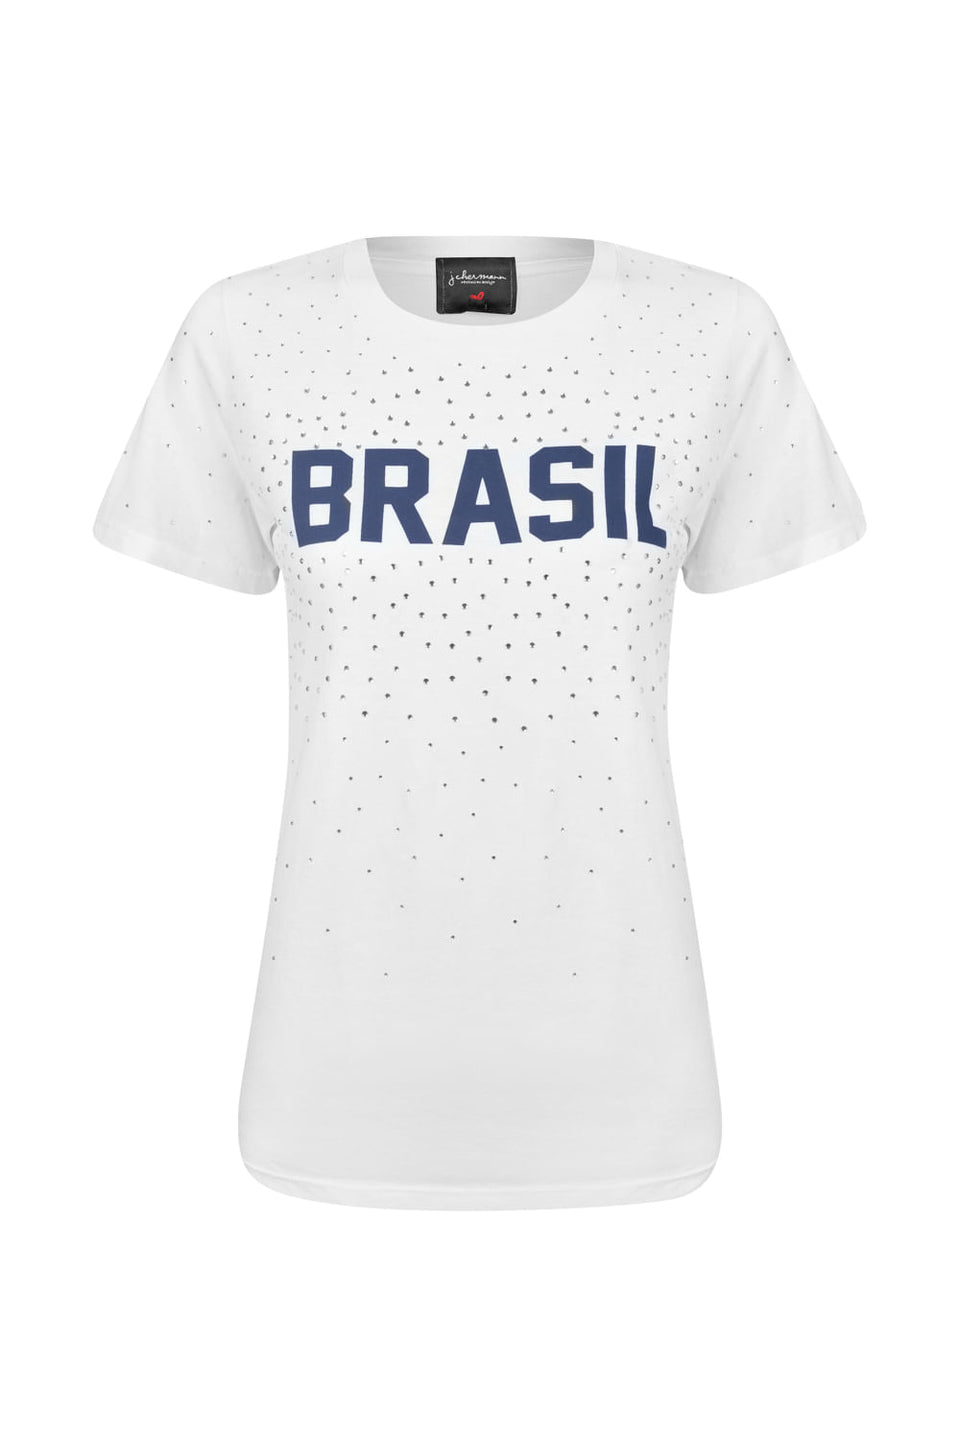 Camiseta Brasil Strass Branco - Personalizável